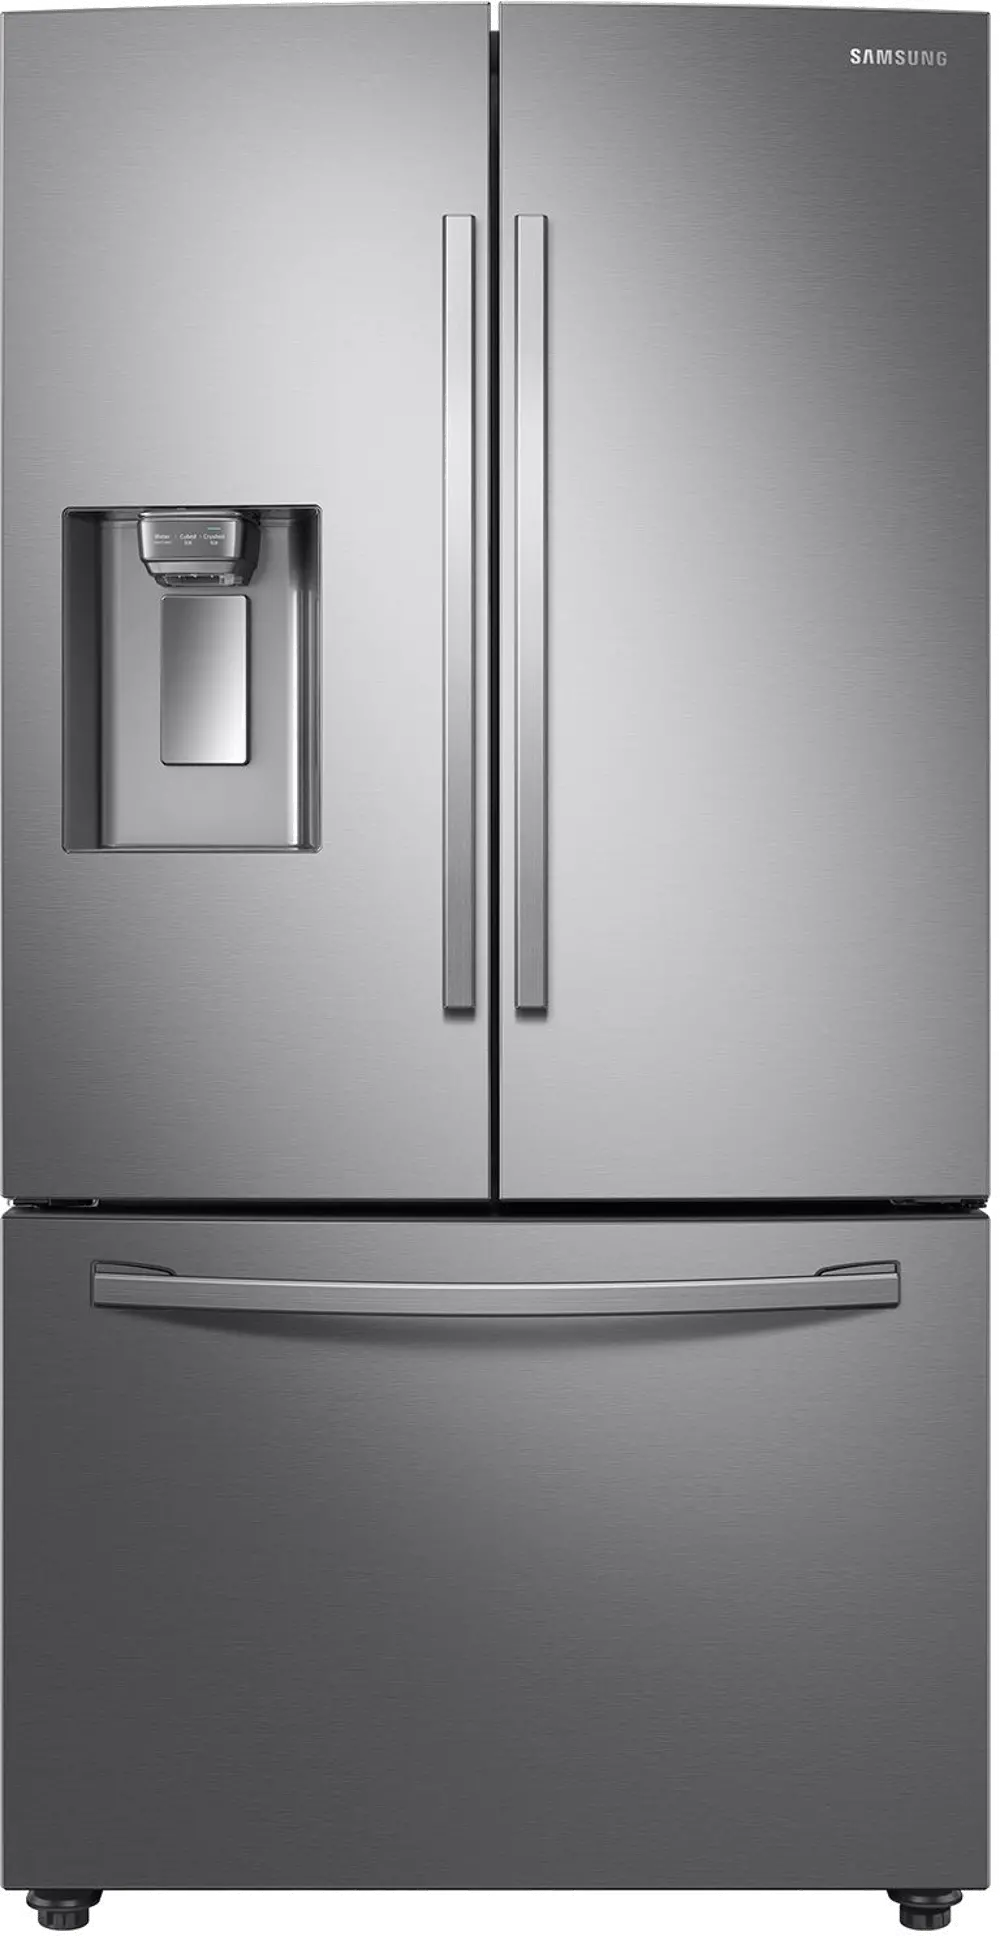 RF23R6201SR Samsung 22.6 cu ft French Door Refrigerator - Counter Depth Stainless Steel-1